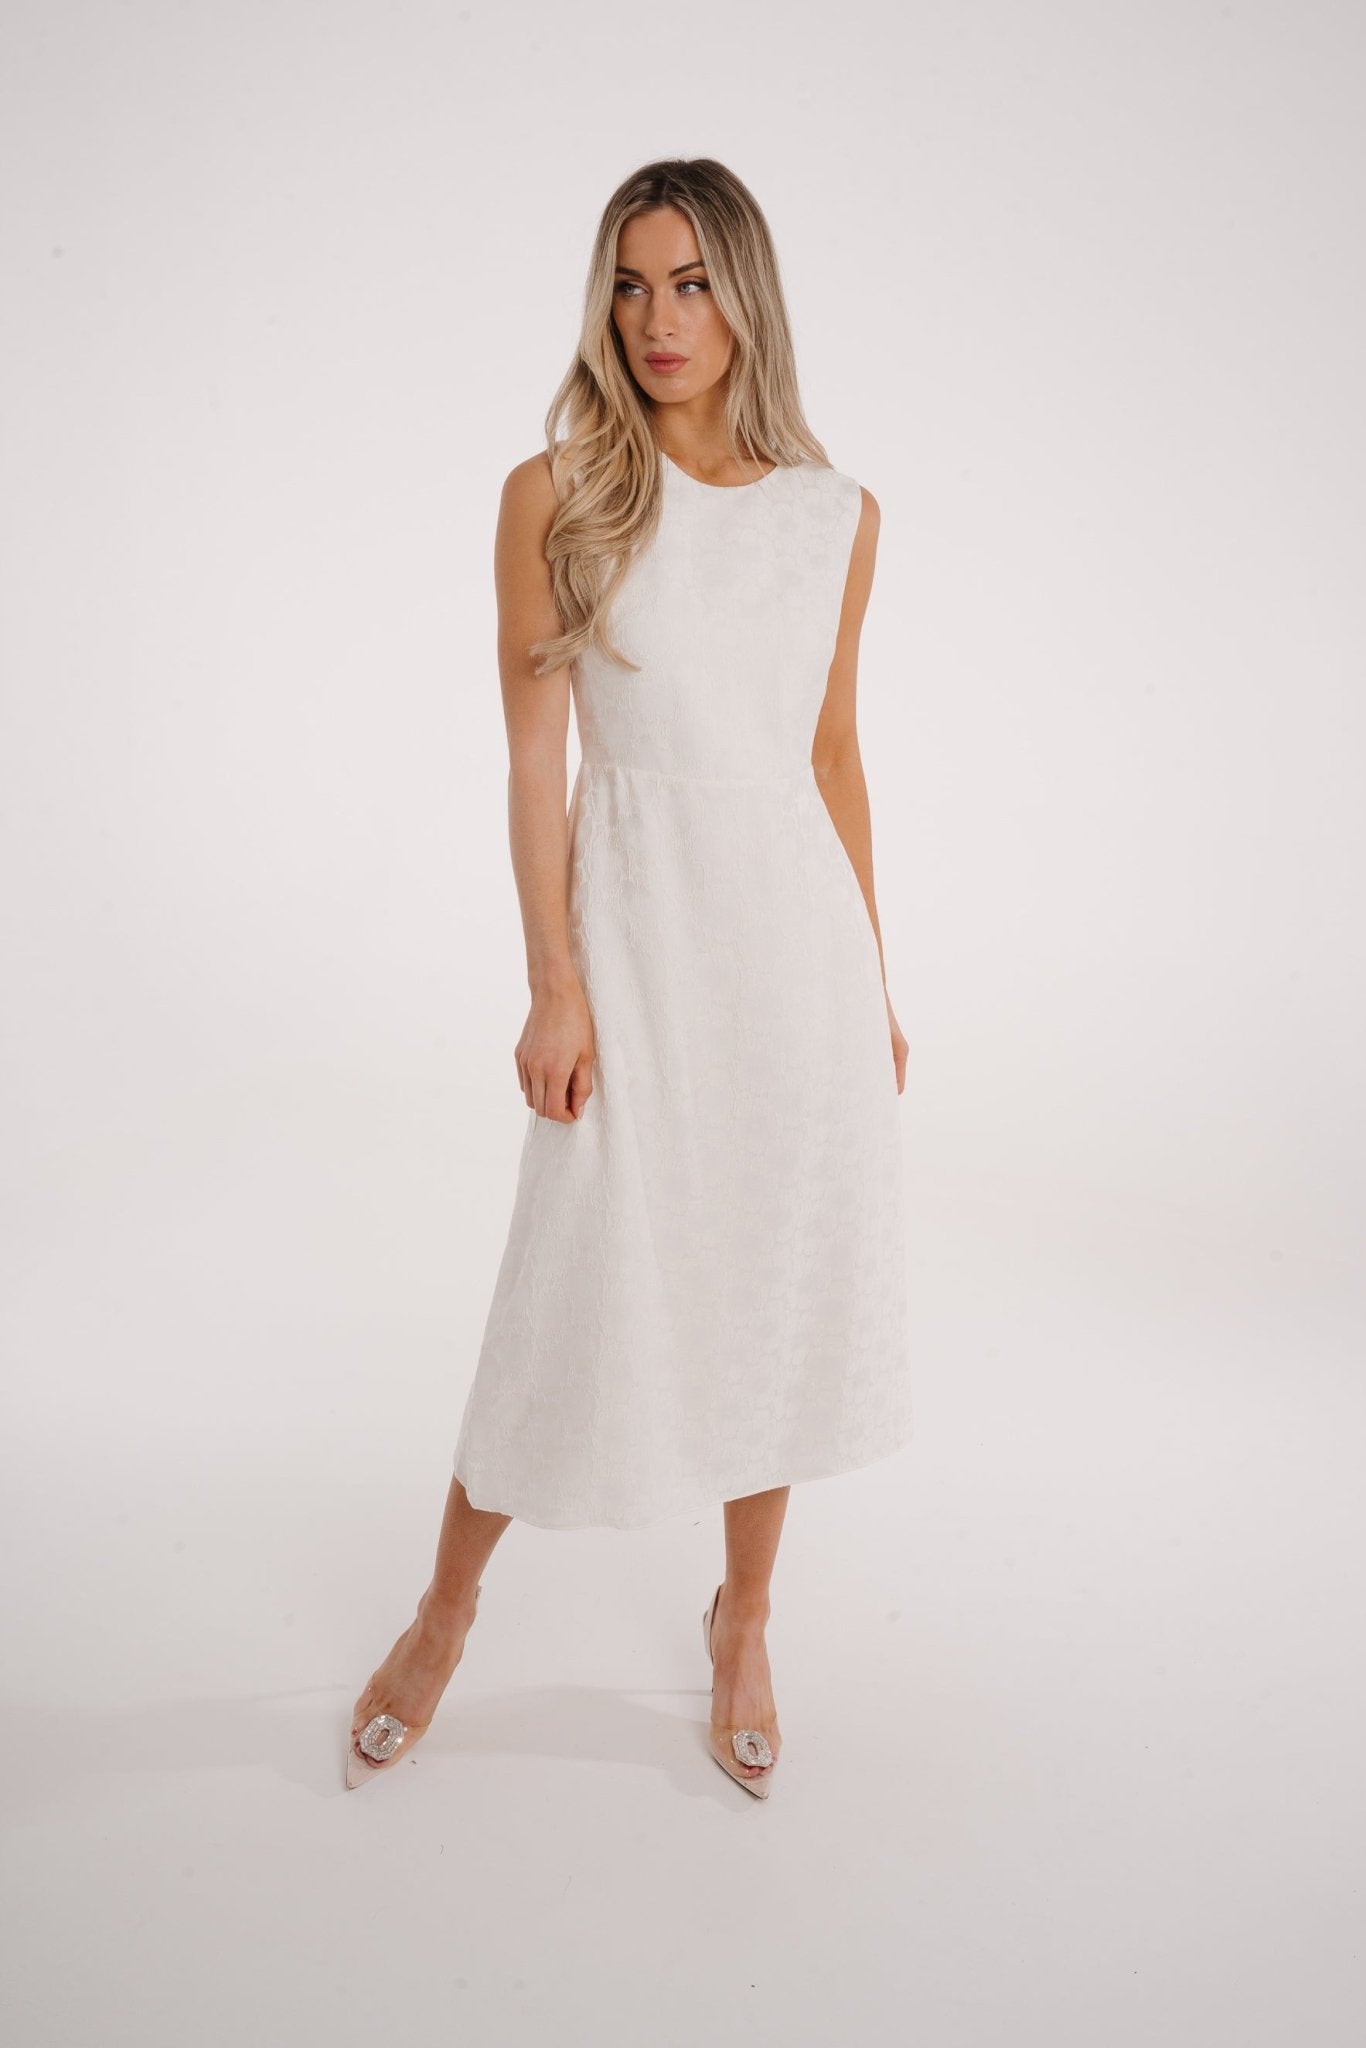 Kayla Embroidered Dress In Cream - The Walk in Wardrobe